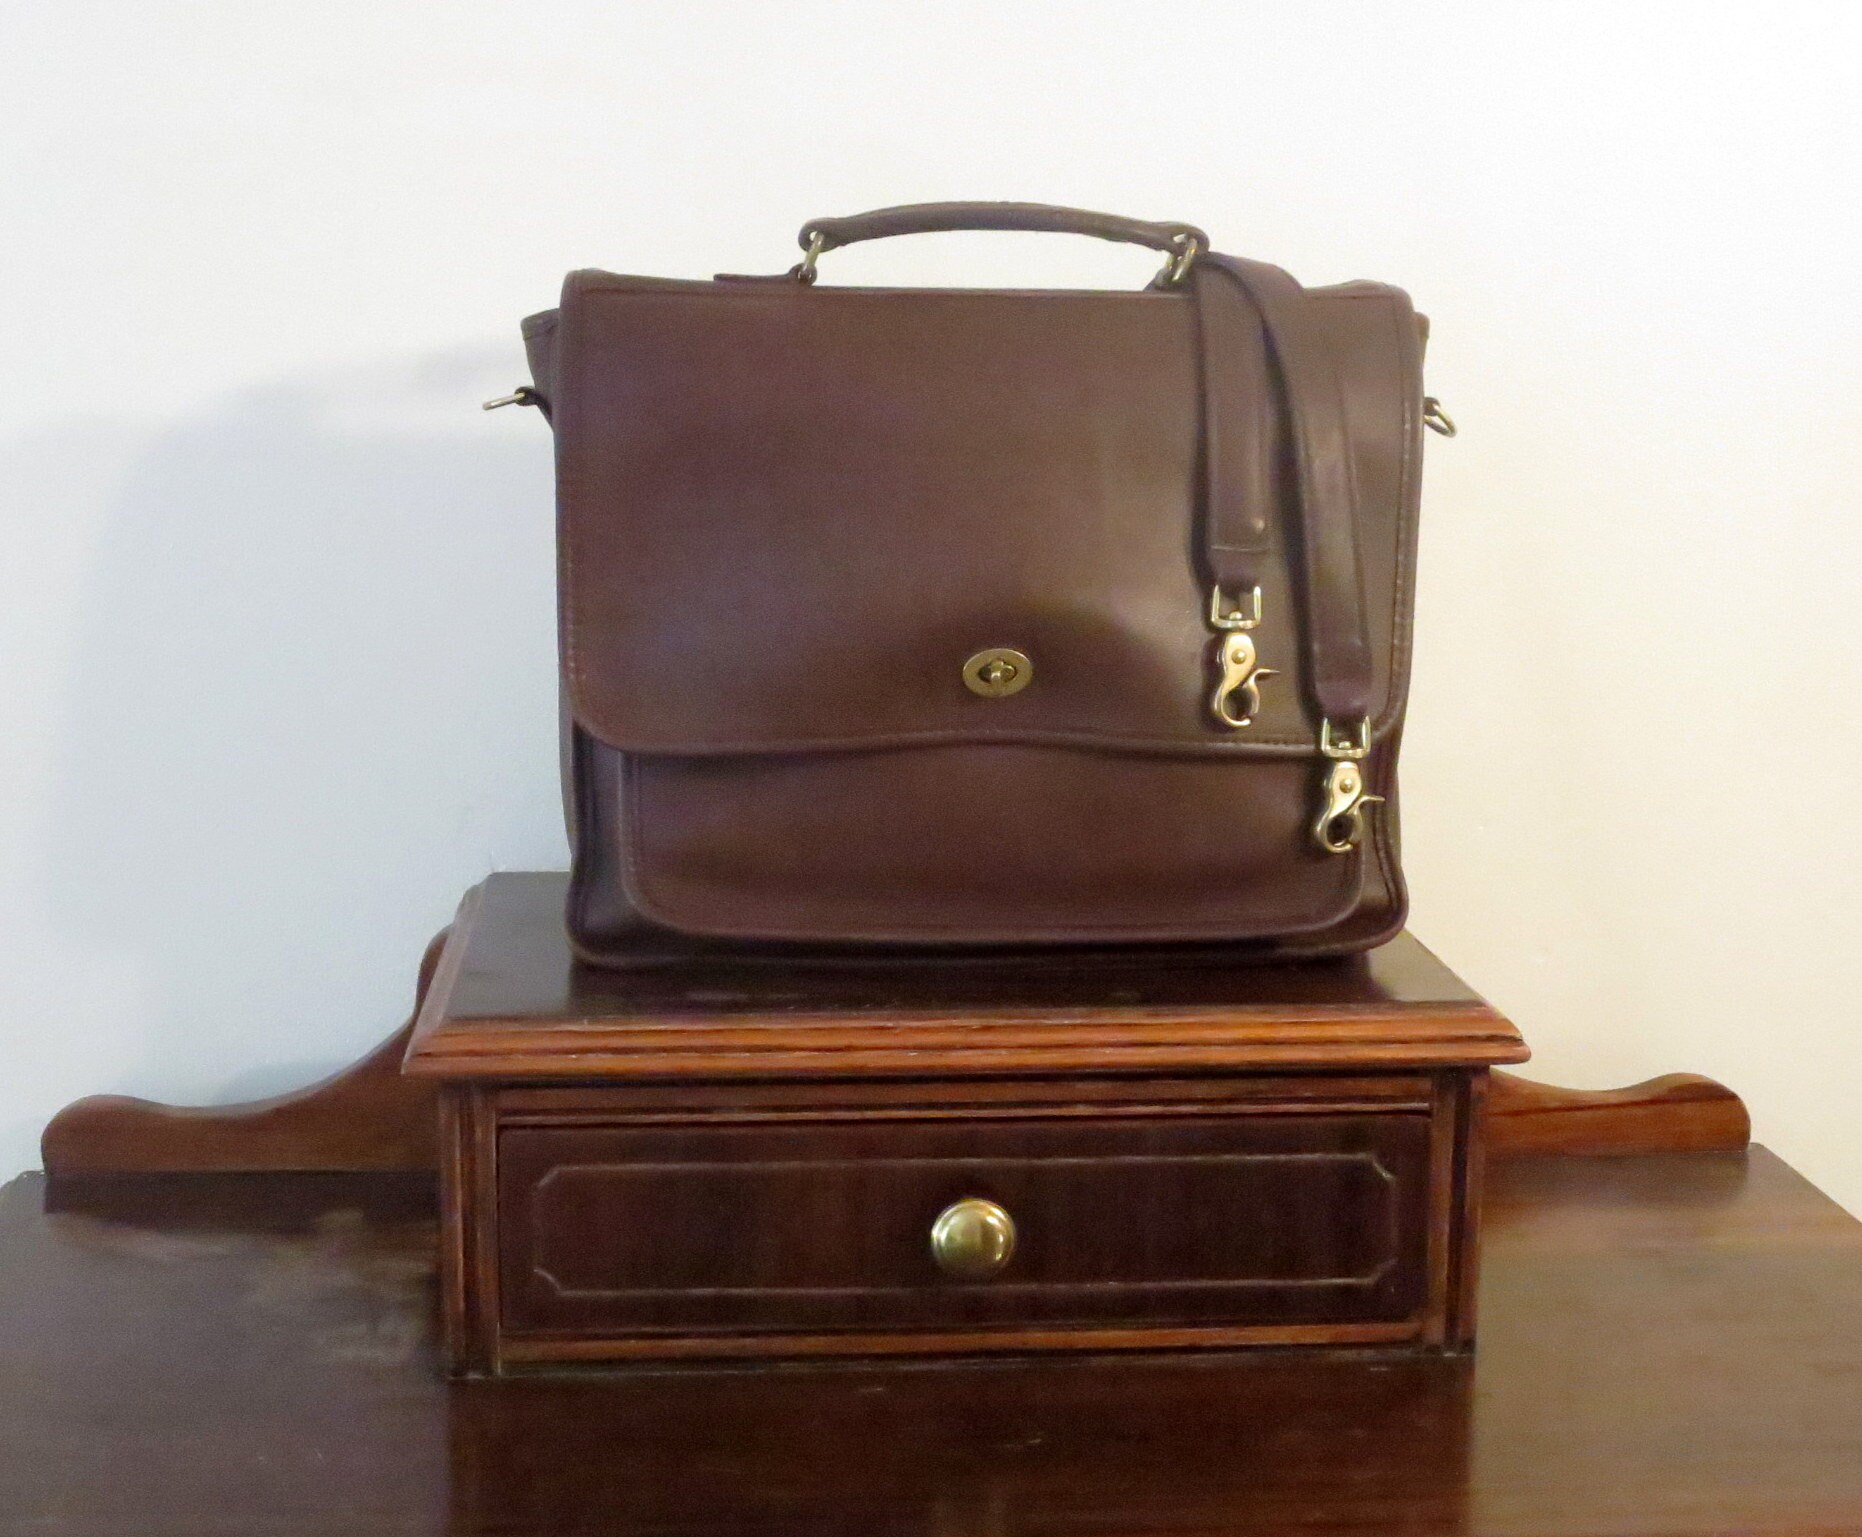 Samsonite Black Napa Work Travel Business Leather Briefcase